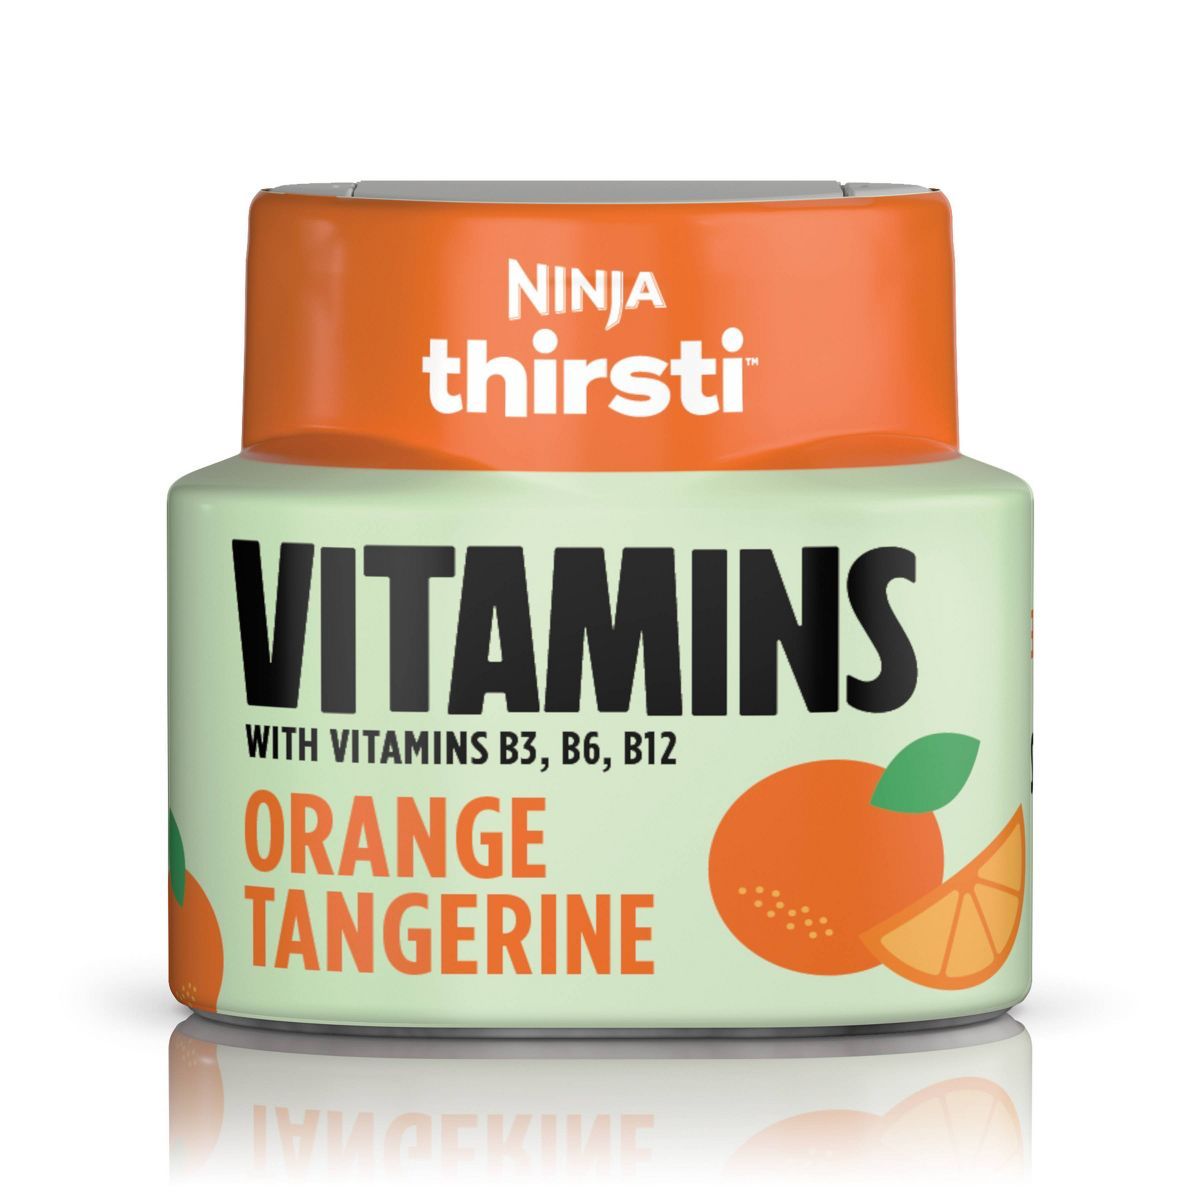 Ninja Thirsti VITAMINS Orange Tangerine Flavored Water Drops | Target